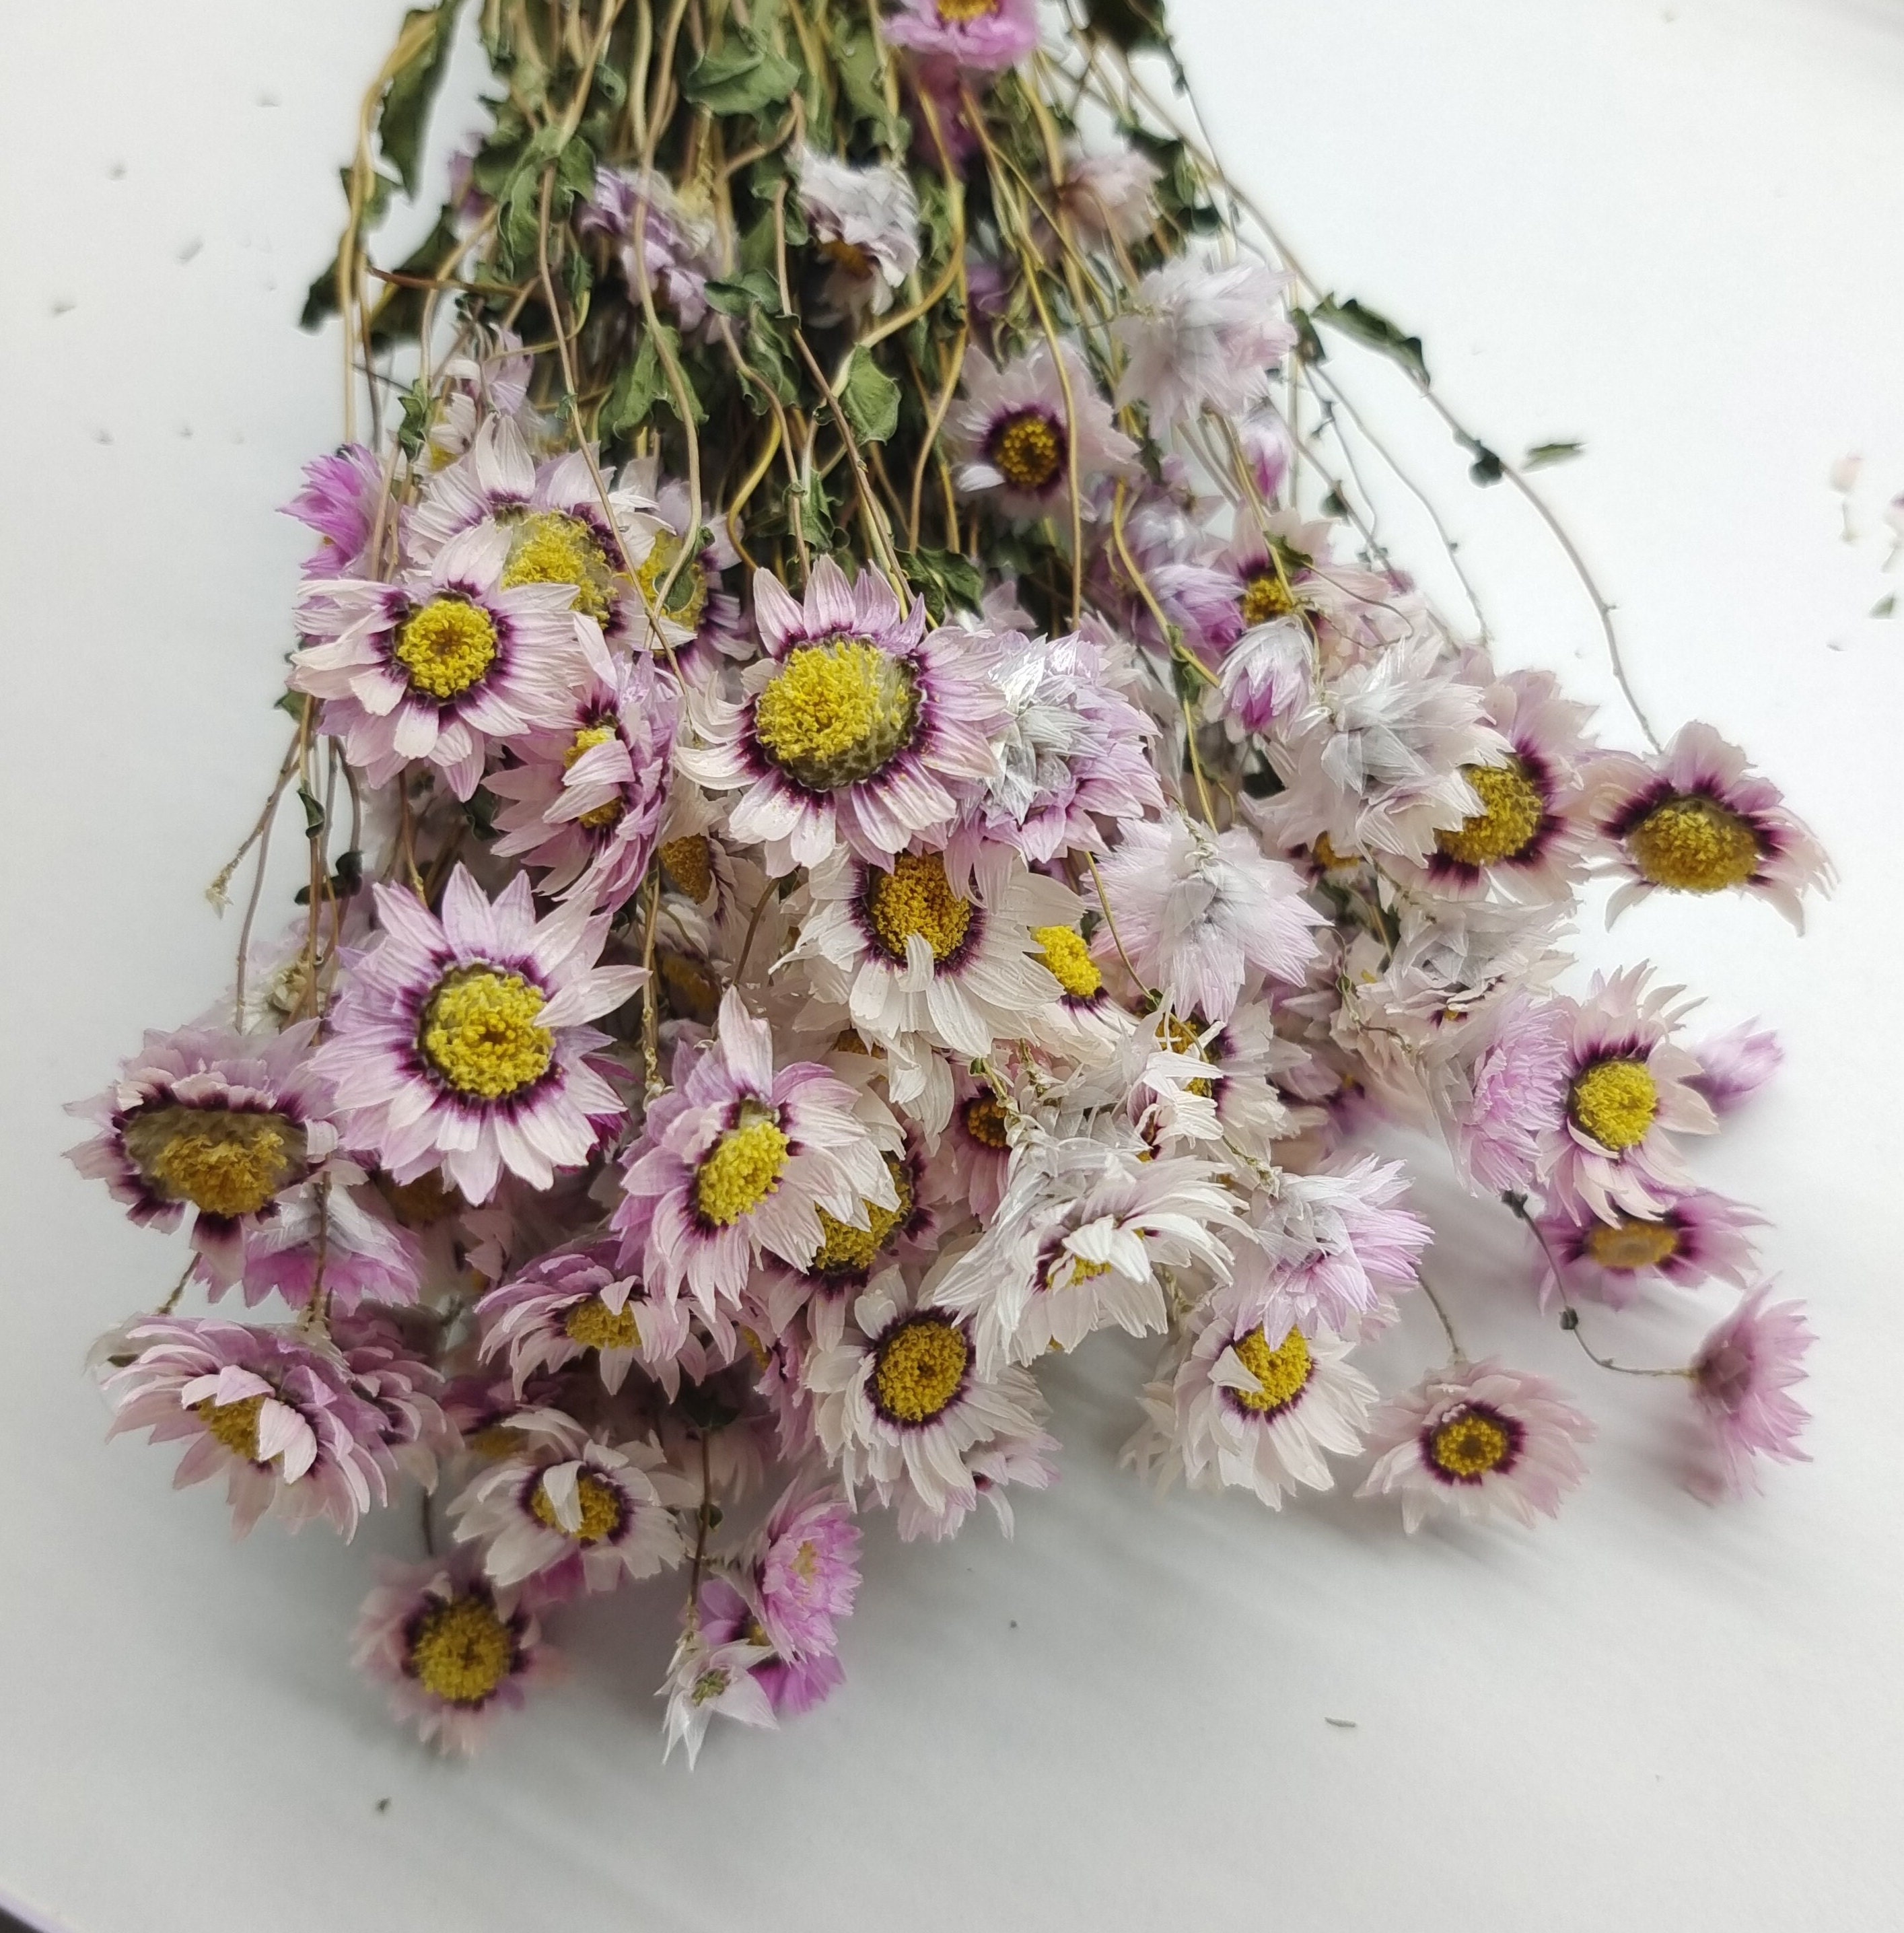 Pink Dried Flower Bunch, Acroclinium Pink, Straw Flowers Bouquet, Preserved  Helipterum, Dried Paper Daisies, Roseum Flower, Wedding Decor 